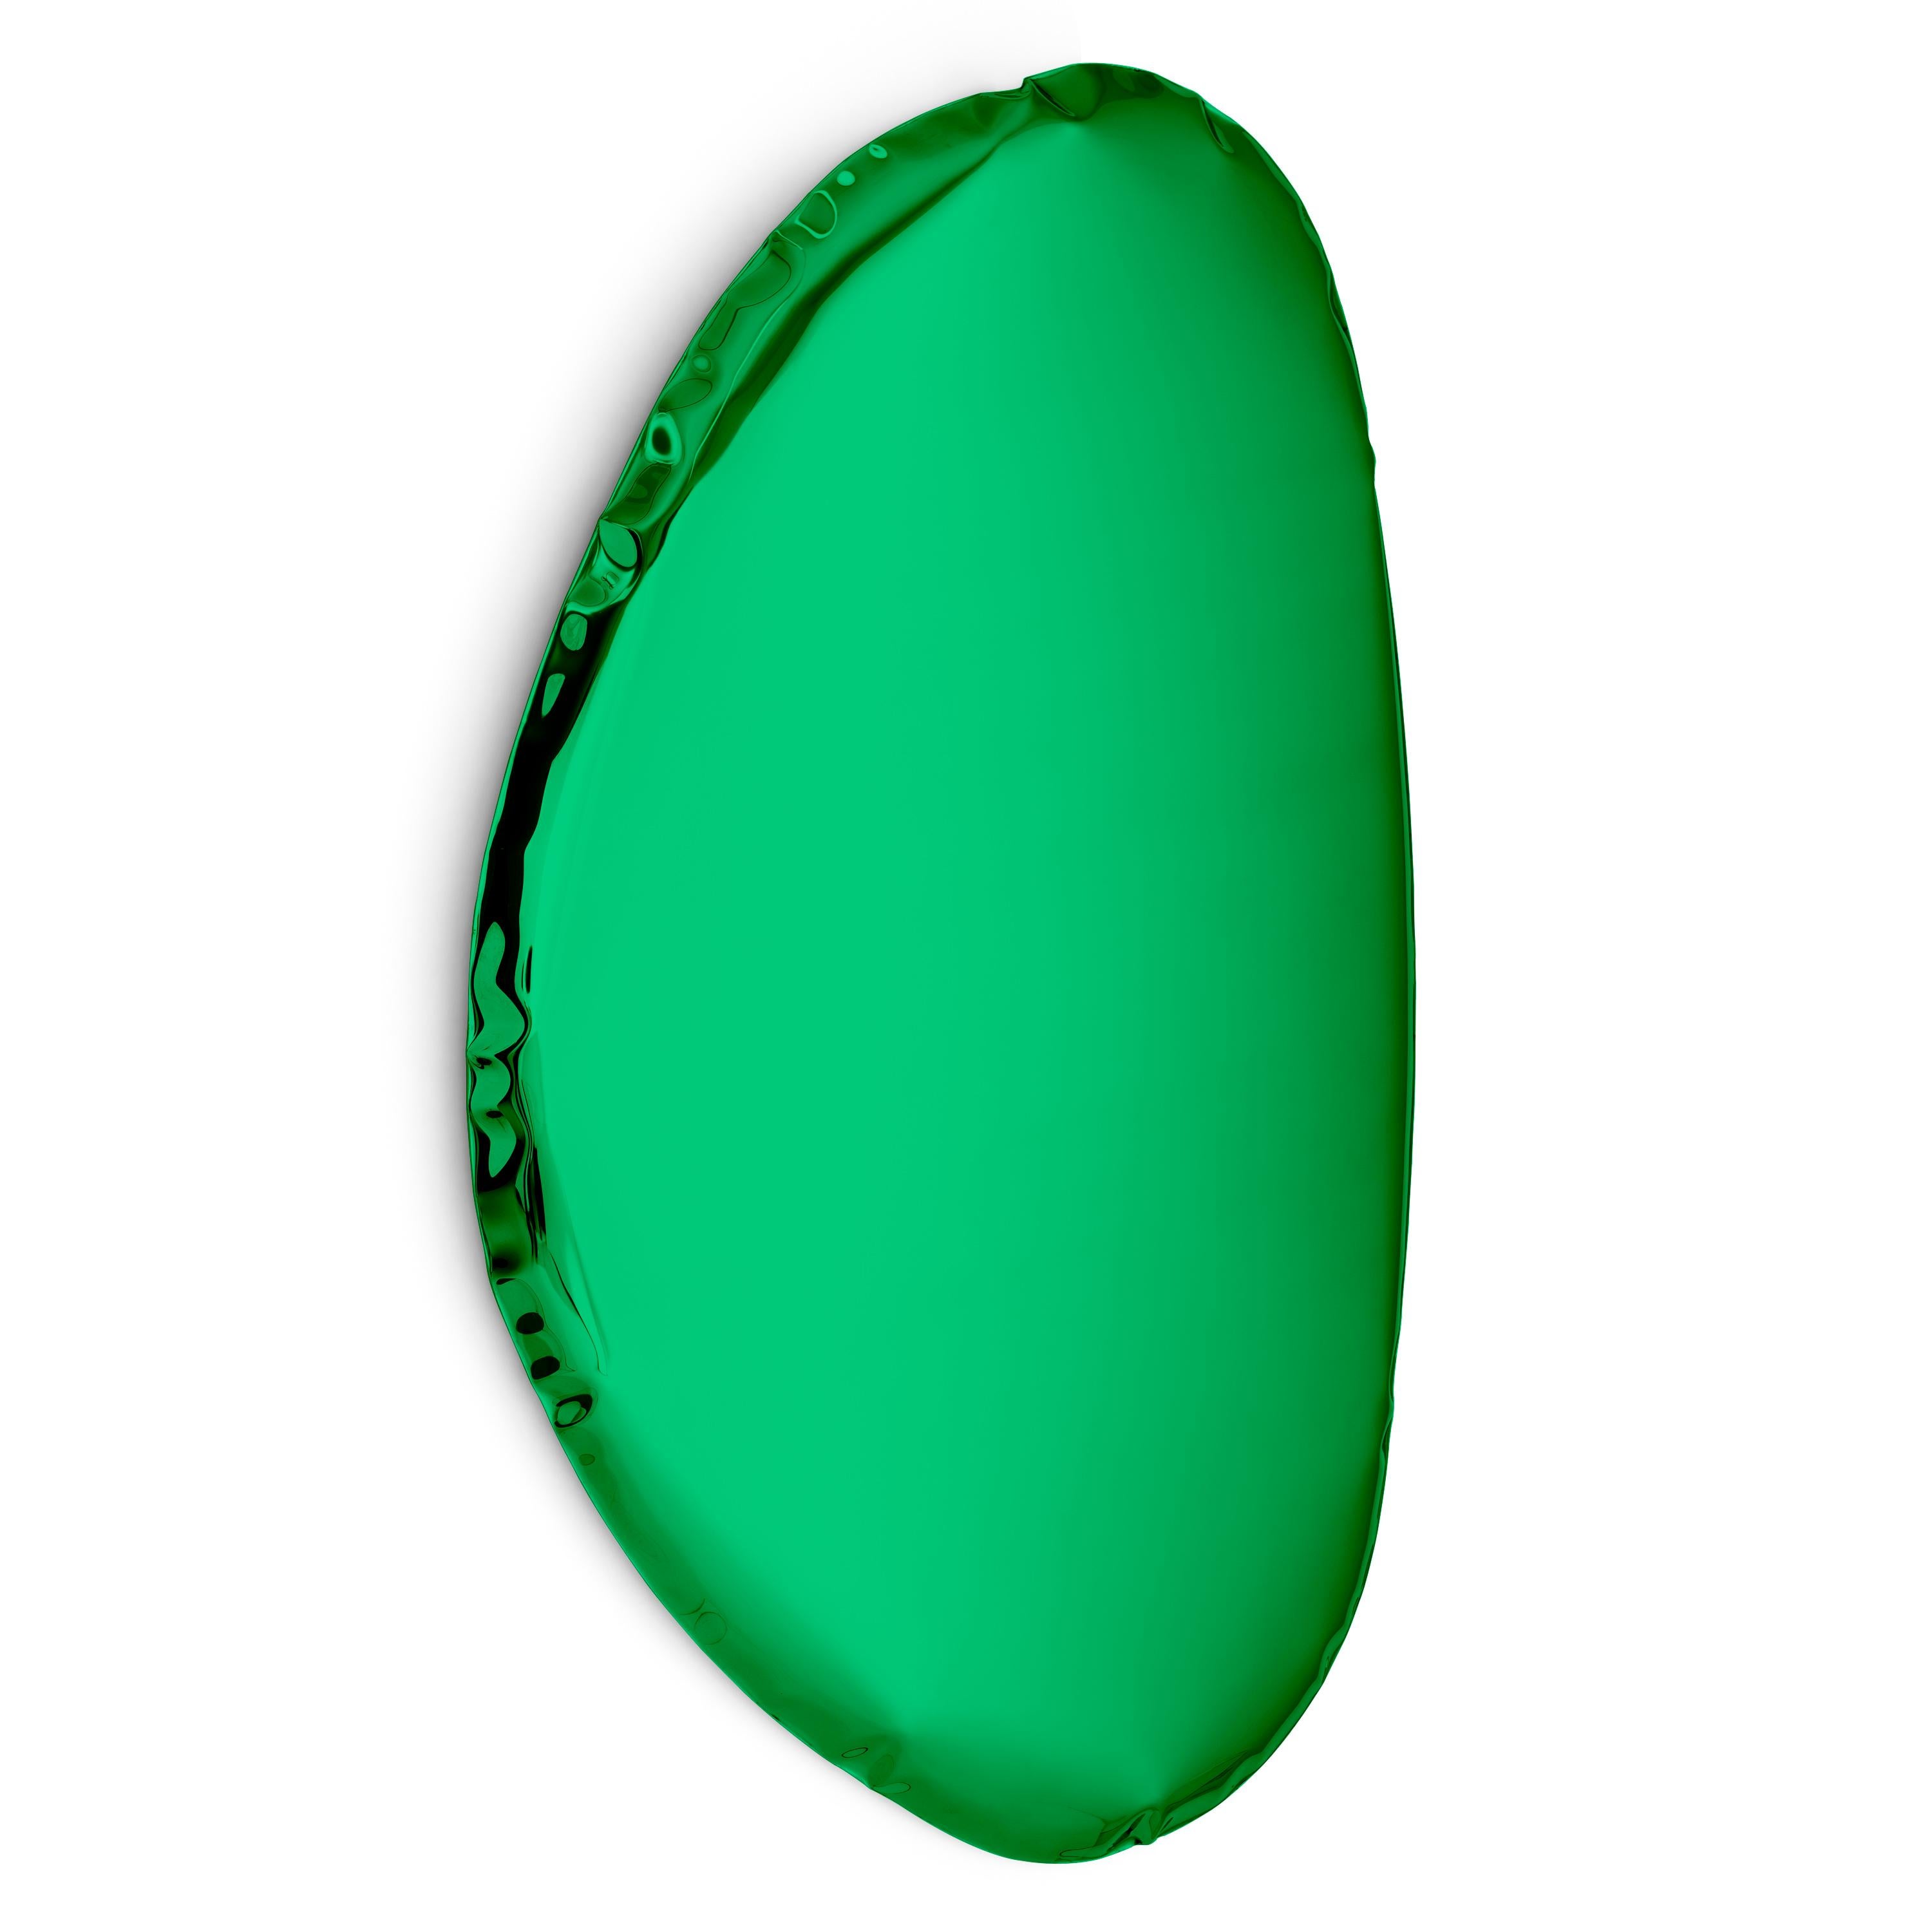 Smaragdfarbener Wandspiegel Tafla O3 von Zieta
Abmessungen: T 6 x B 79 x H 124 cm 
MATERIAL: Rostfreier Stahl.
Ausführung: Smaragdgrün.
Verfügbare Ausführungen: Edelstahl, weiß matt, Saphir/Smaragd, Saphir, Smaragd, tiefes Weltraumblau, dunkle